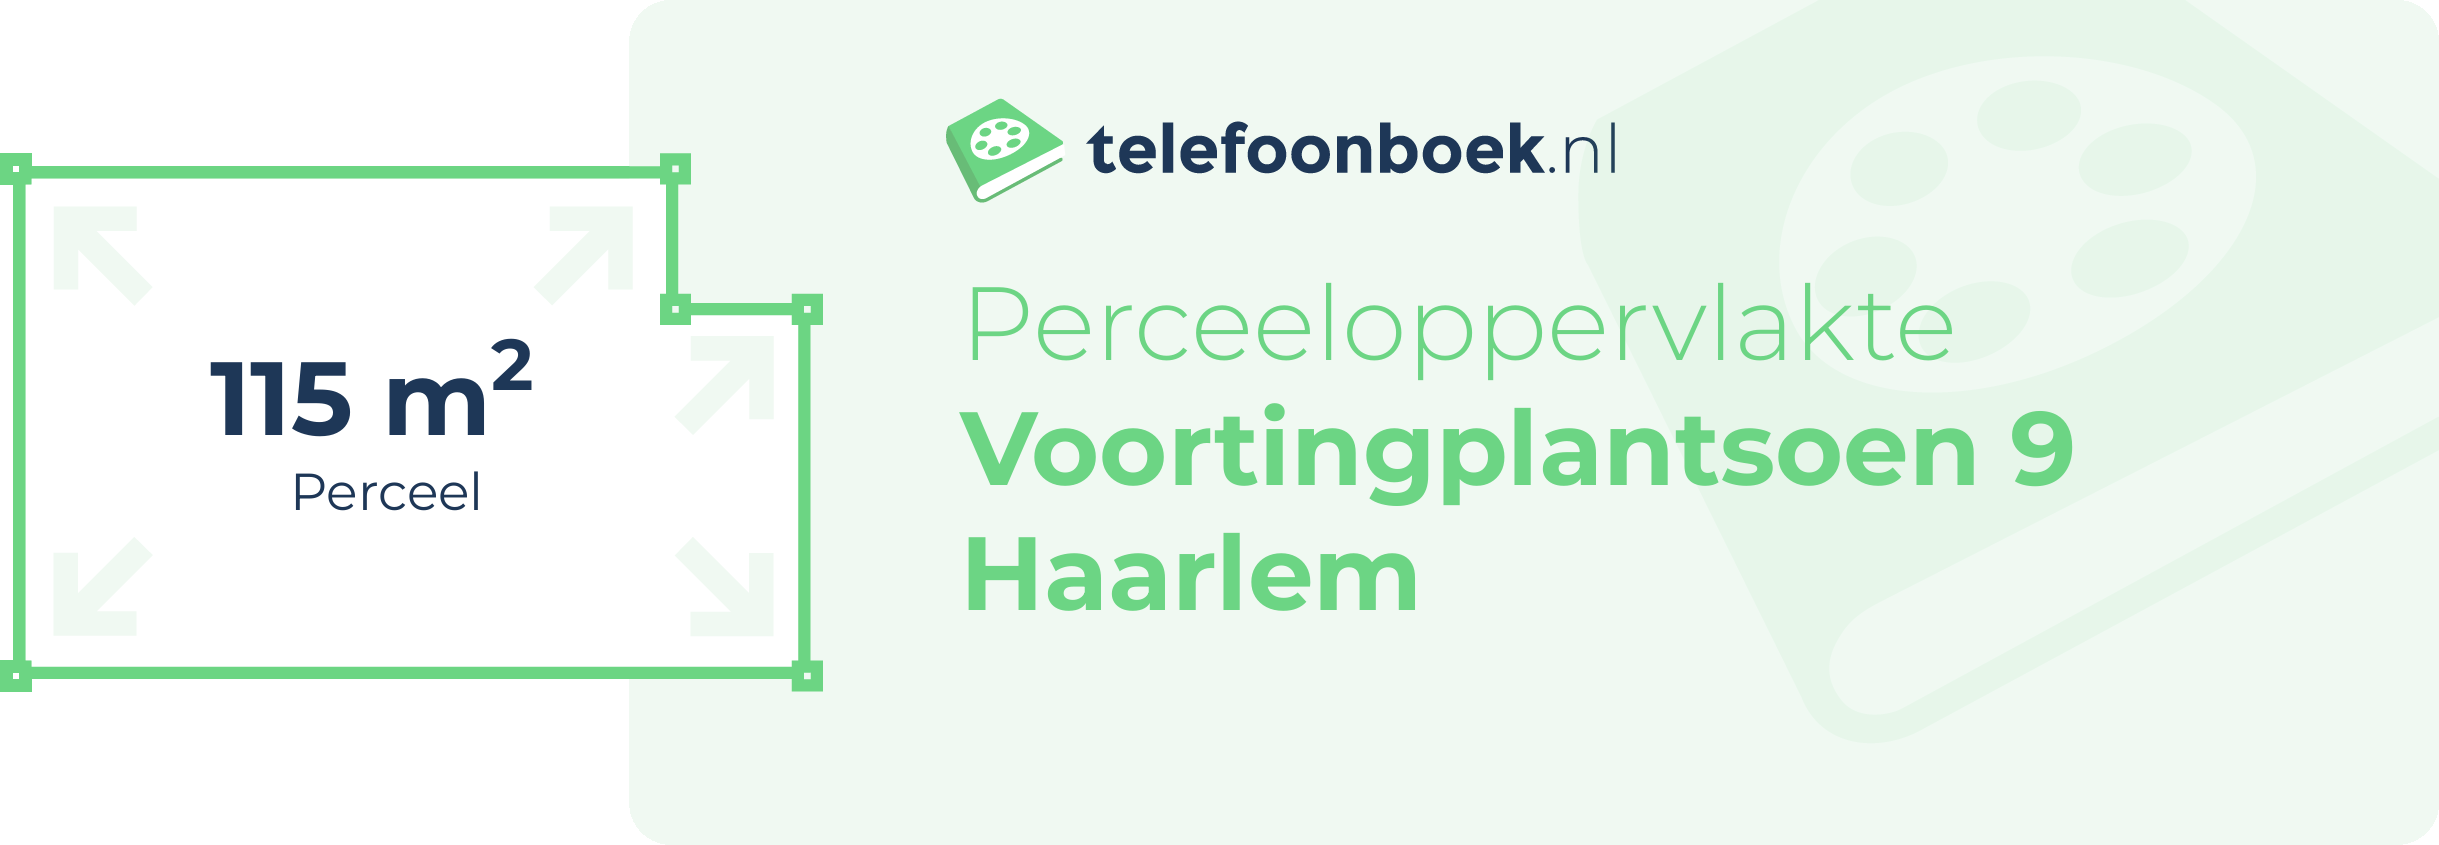 Perceeloppervlakte Voortingplantsoen 9 Haarlem